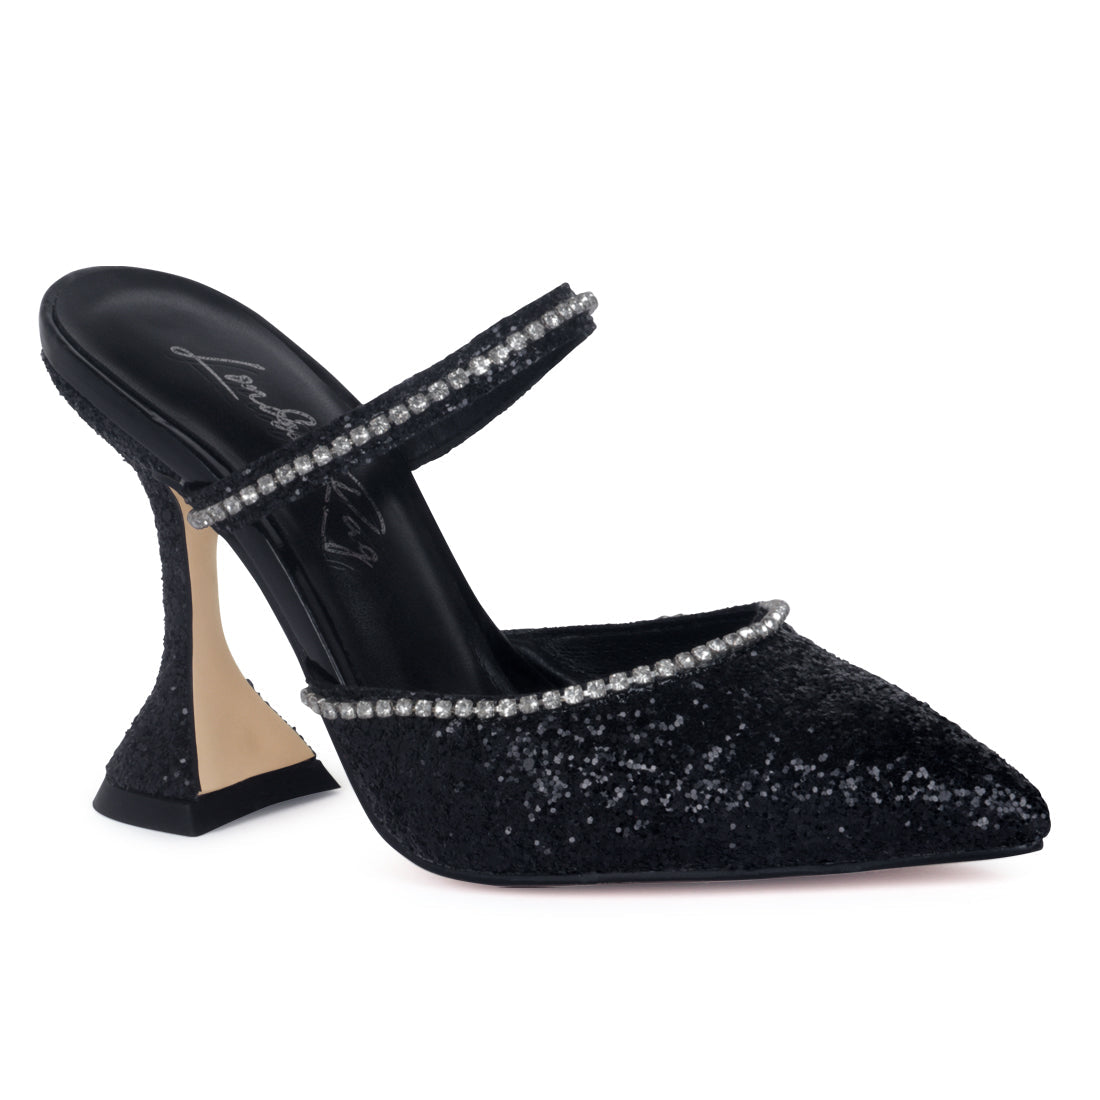 Glitter Spool Heel Sandal in Black - Black